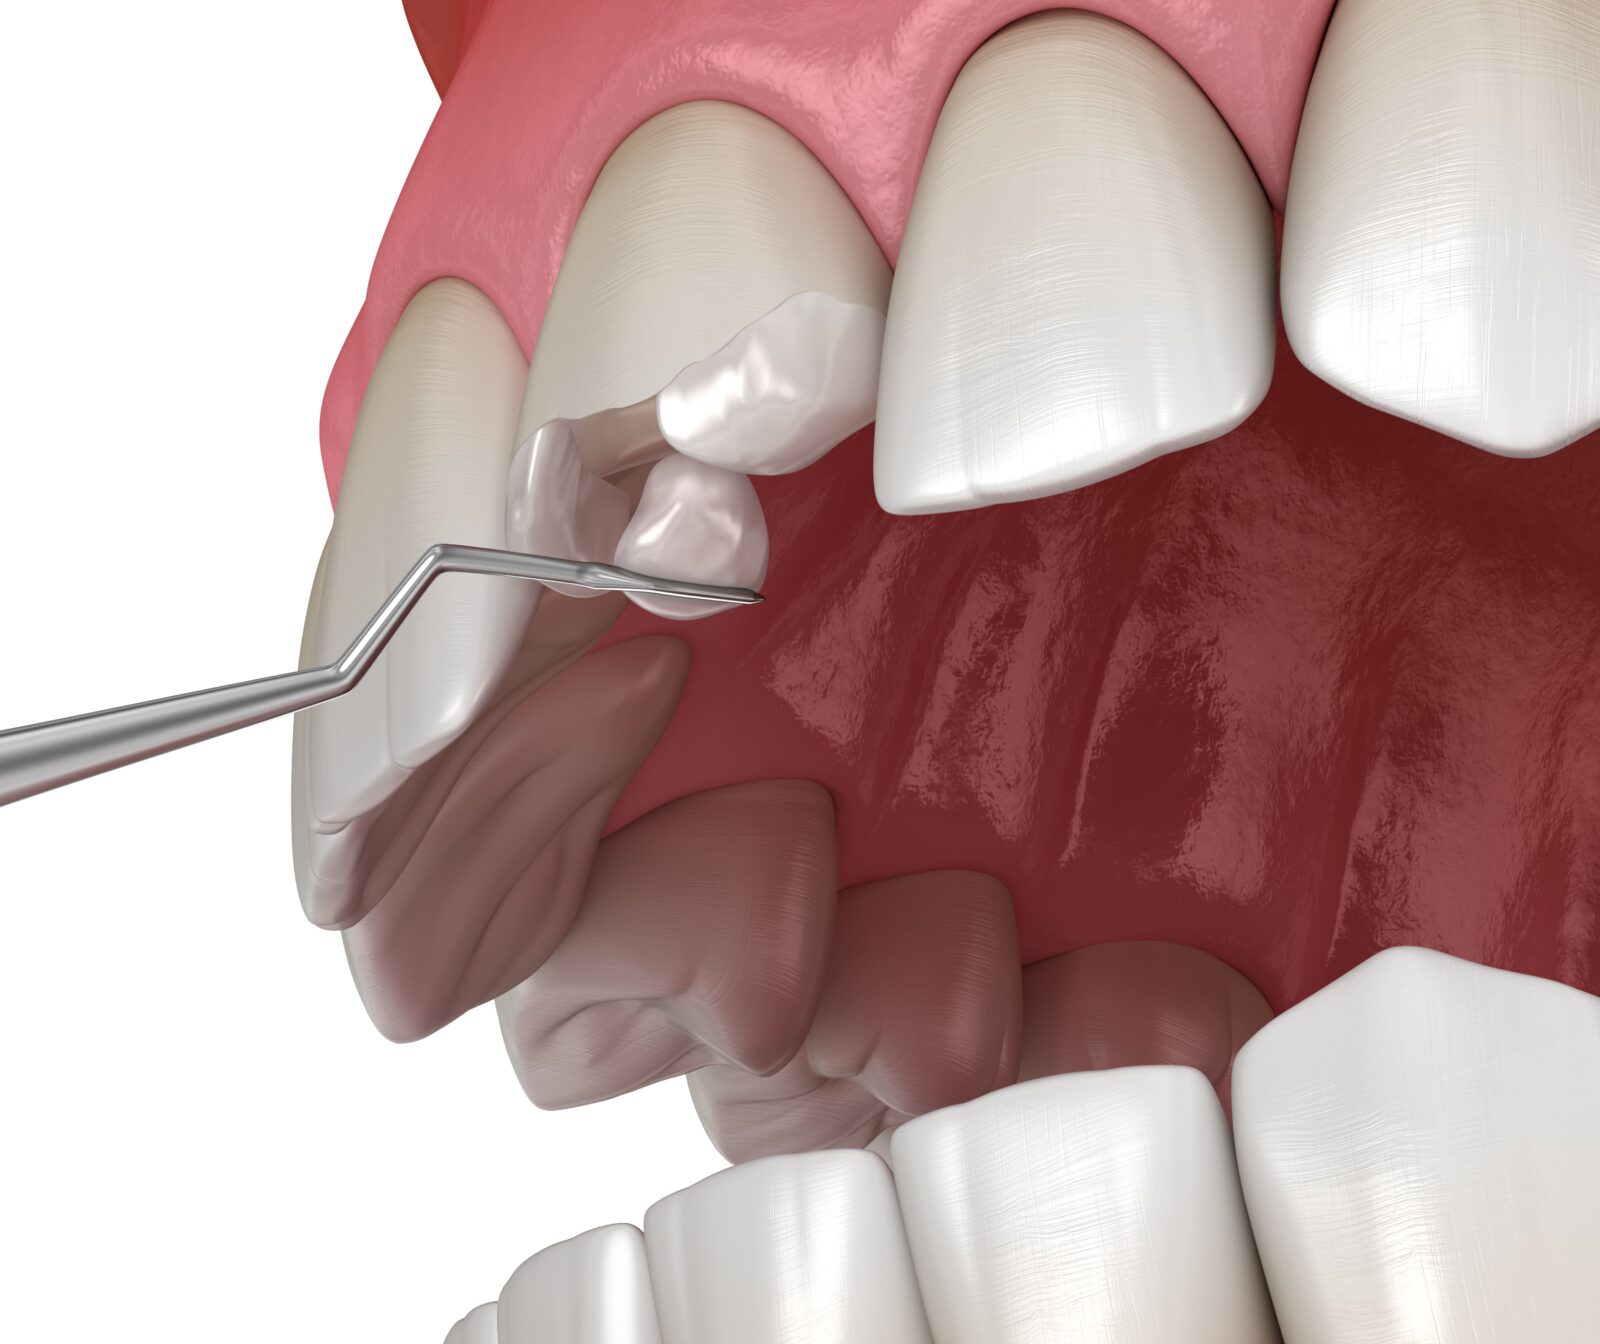 composite resin being used to repair broken tooth